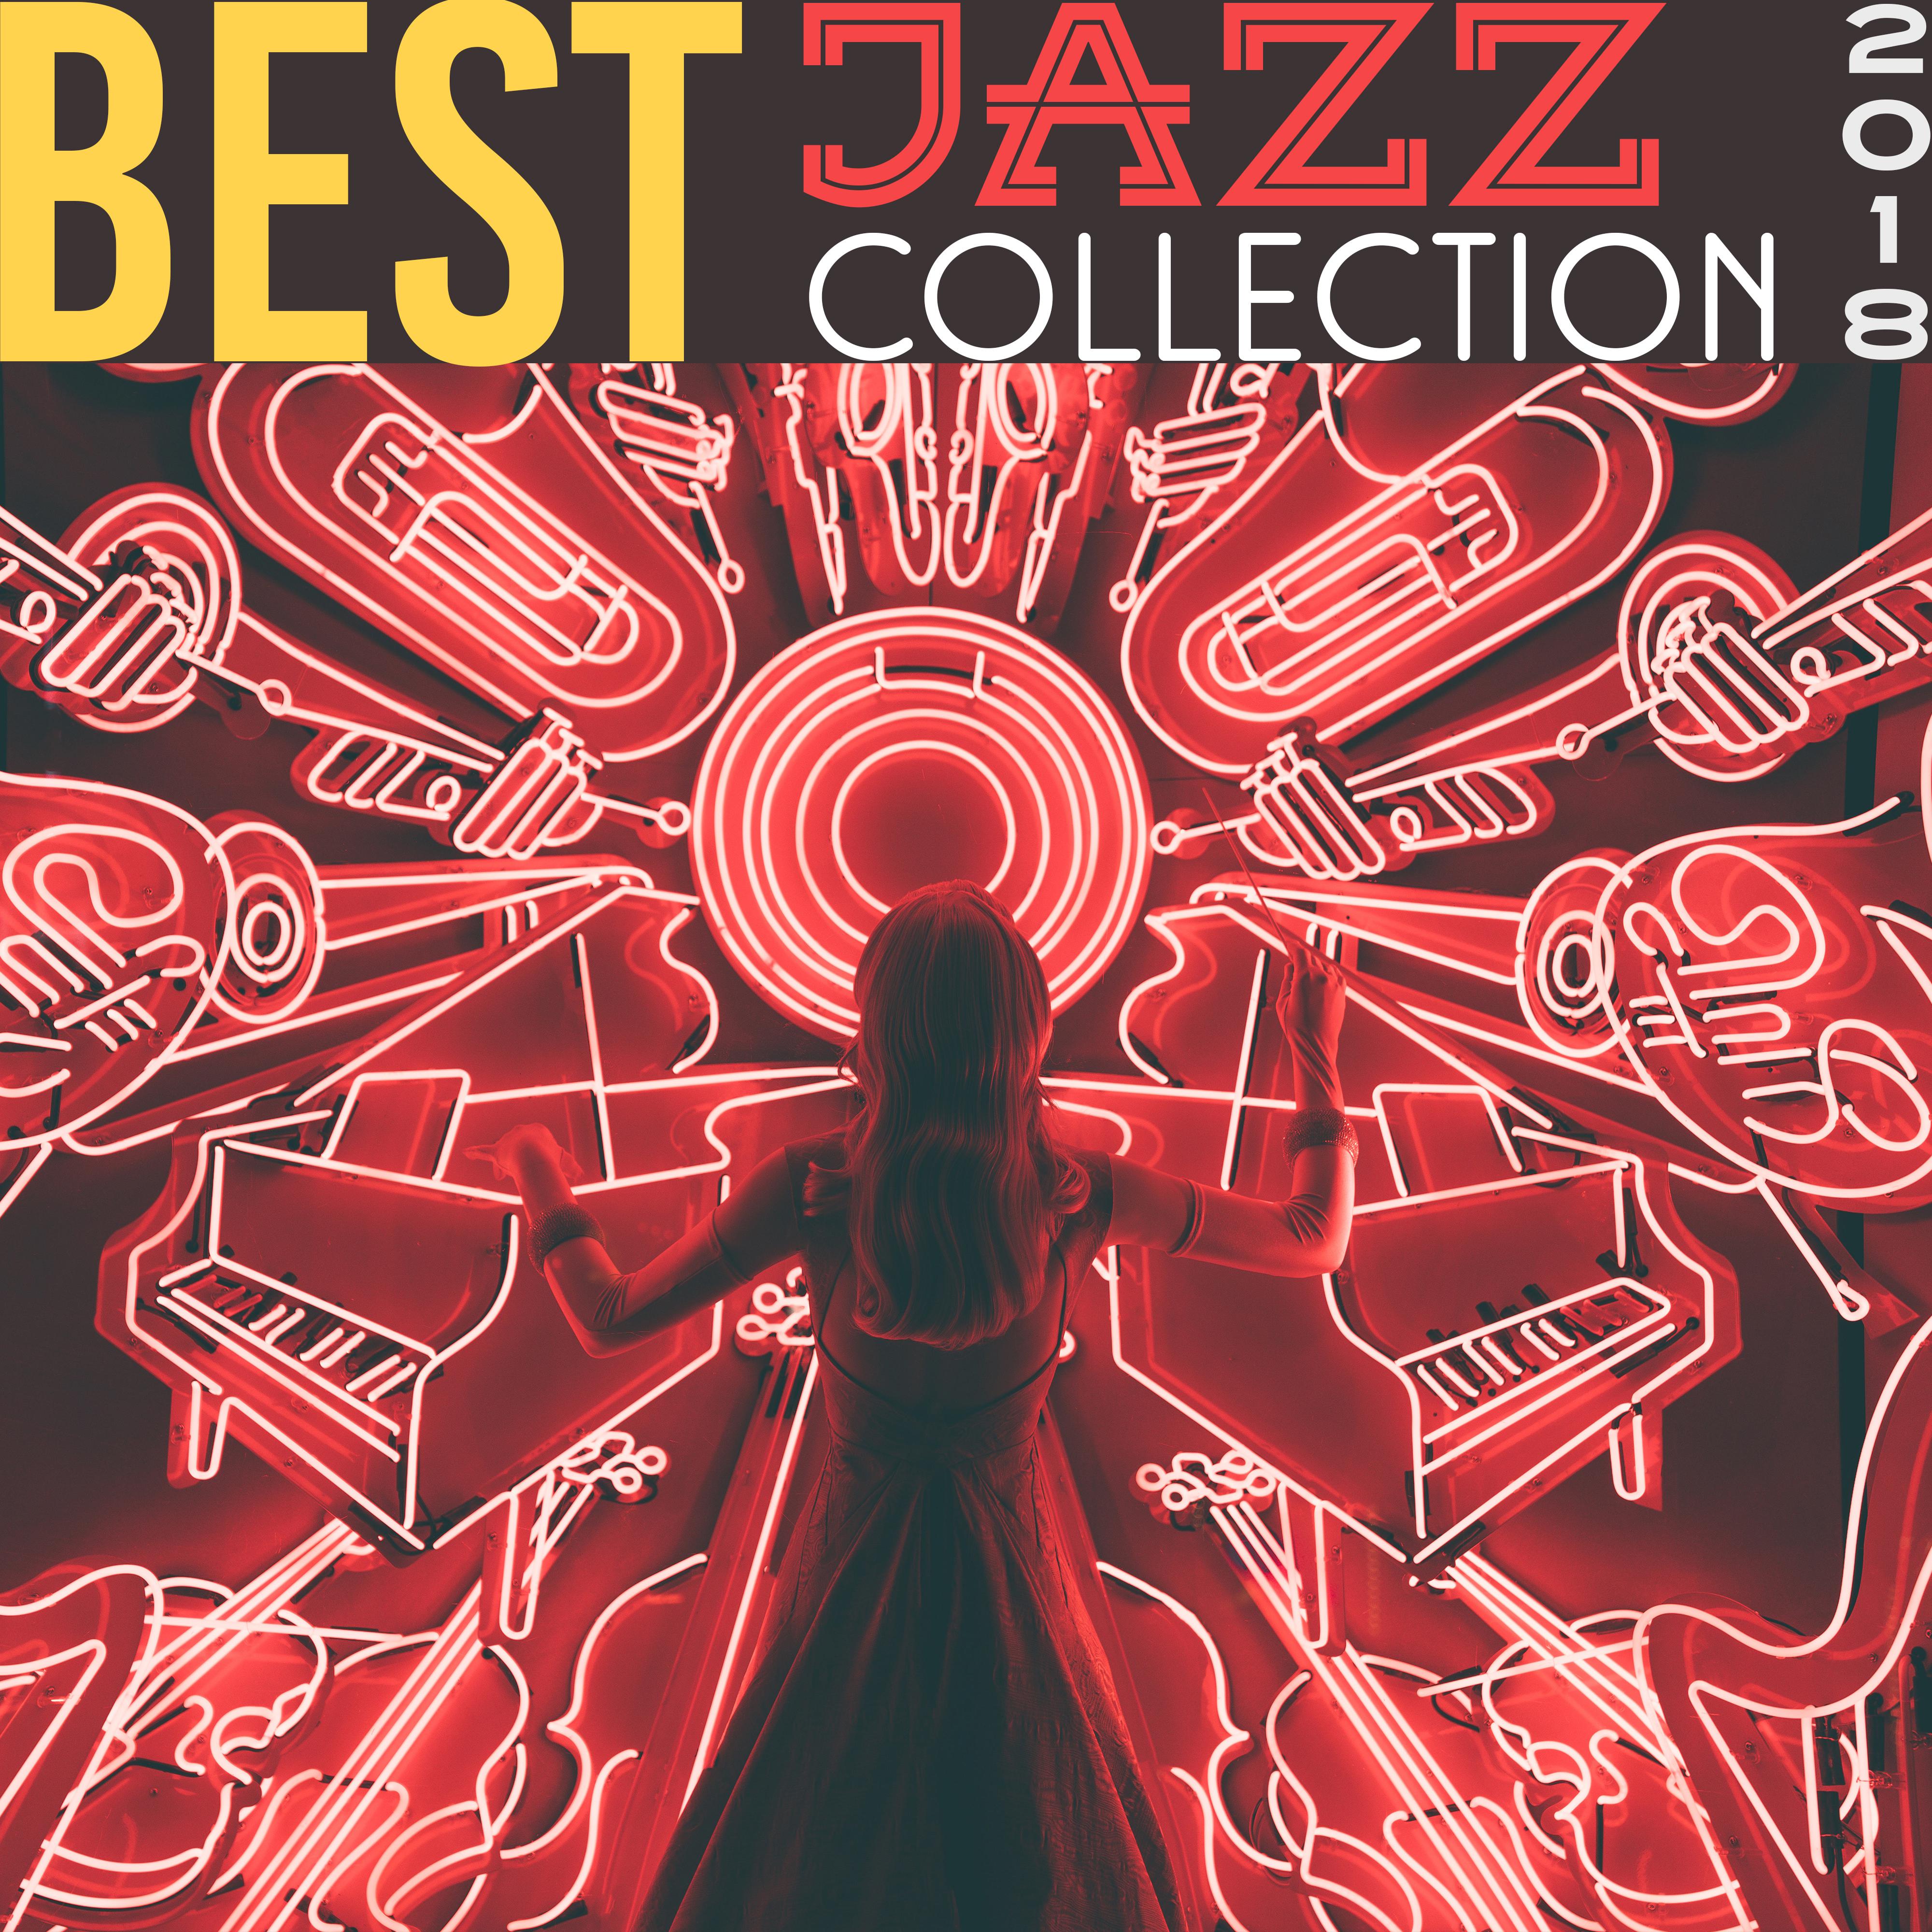 Best Jazz Collection 2018